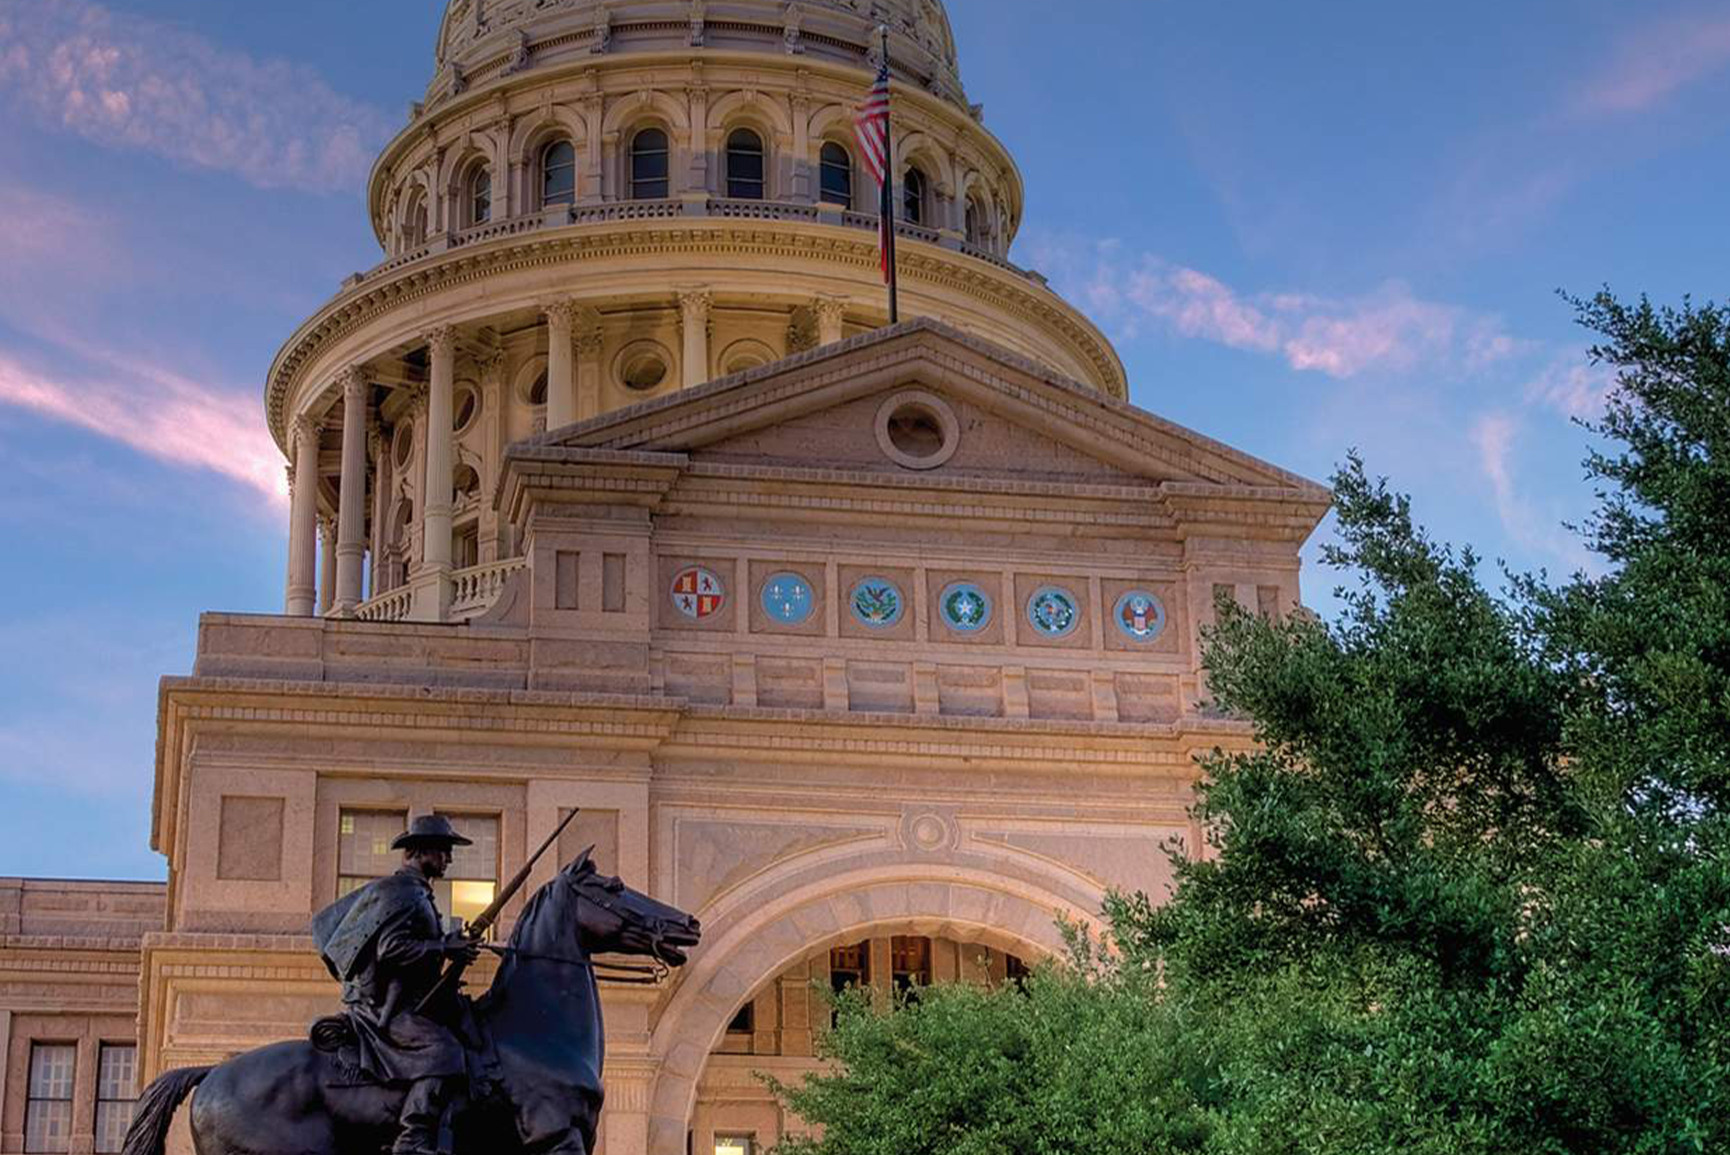 Texas Capitol Building at dusk